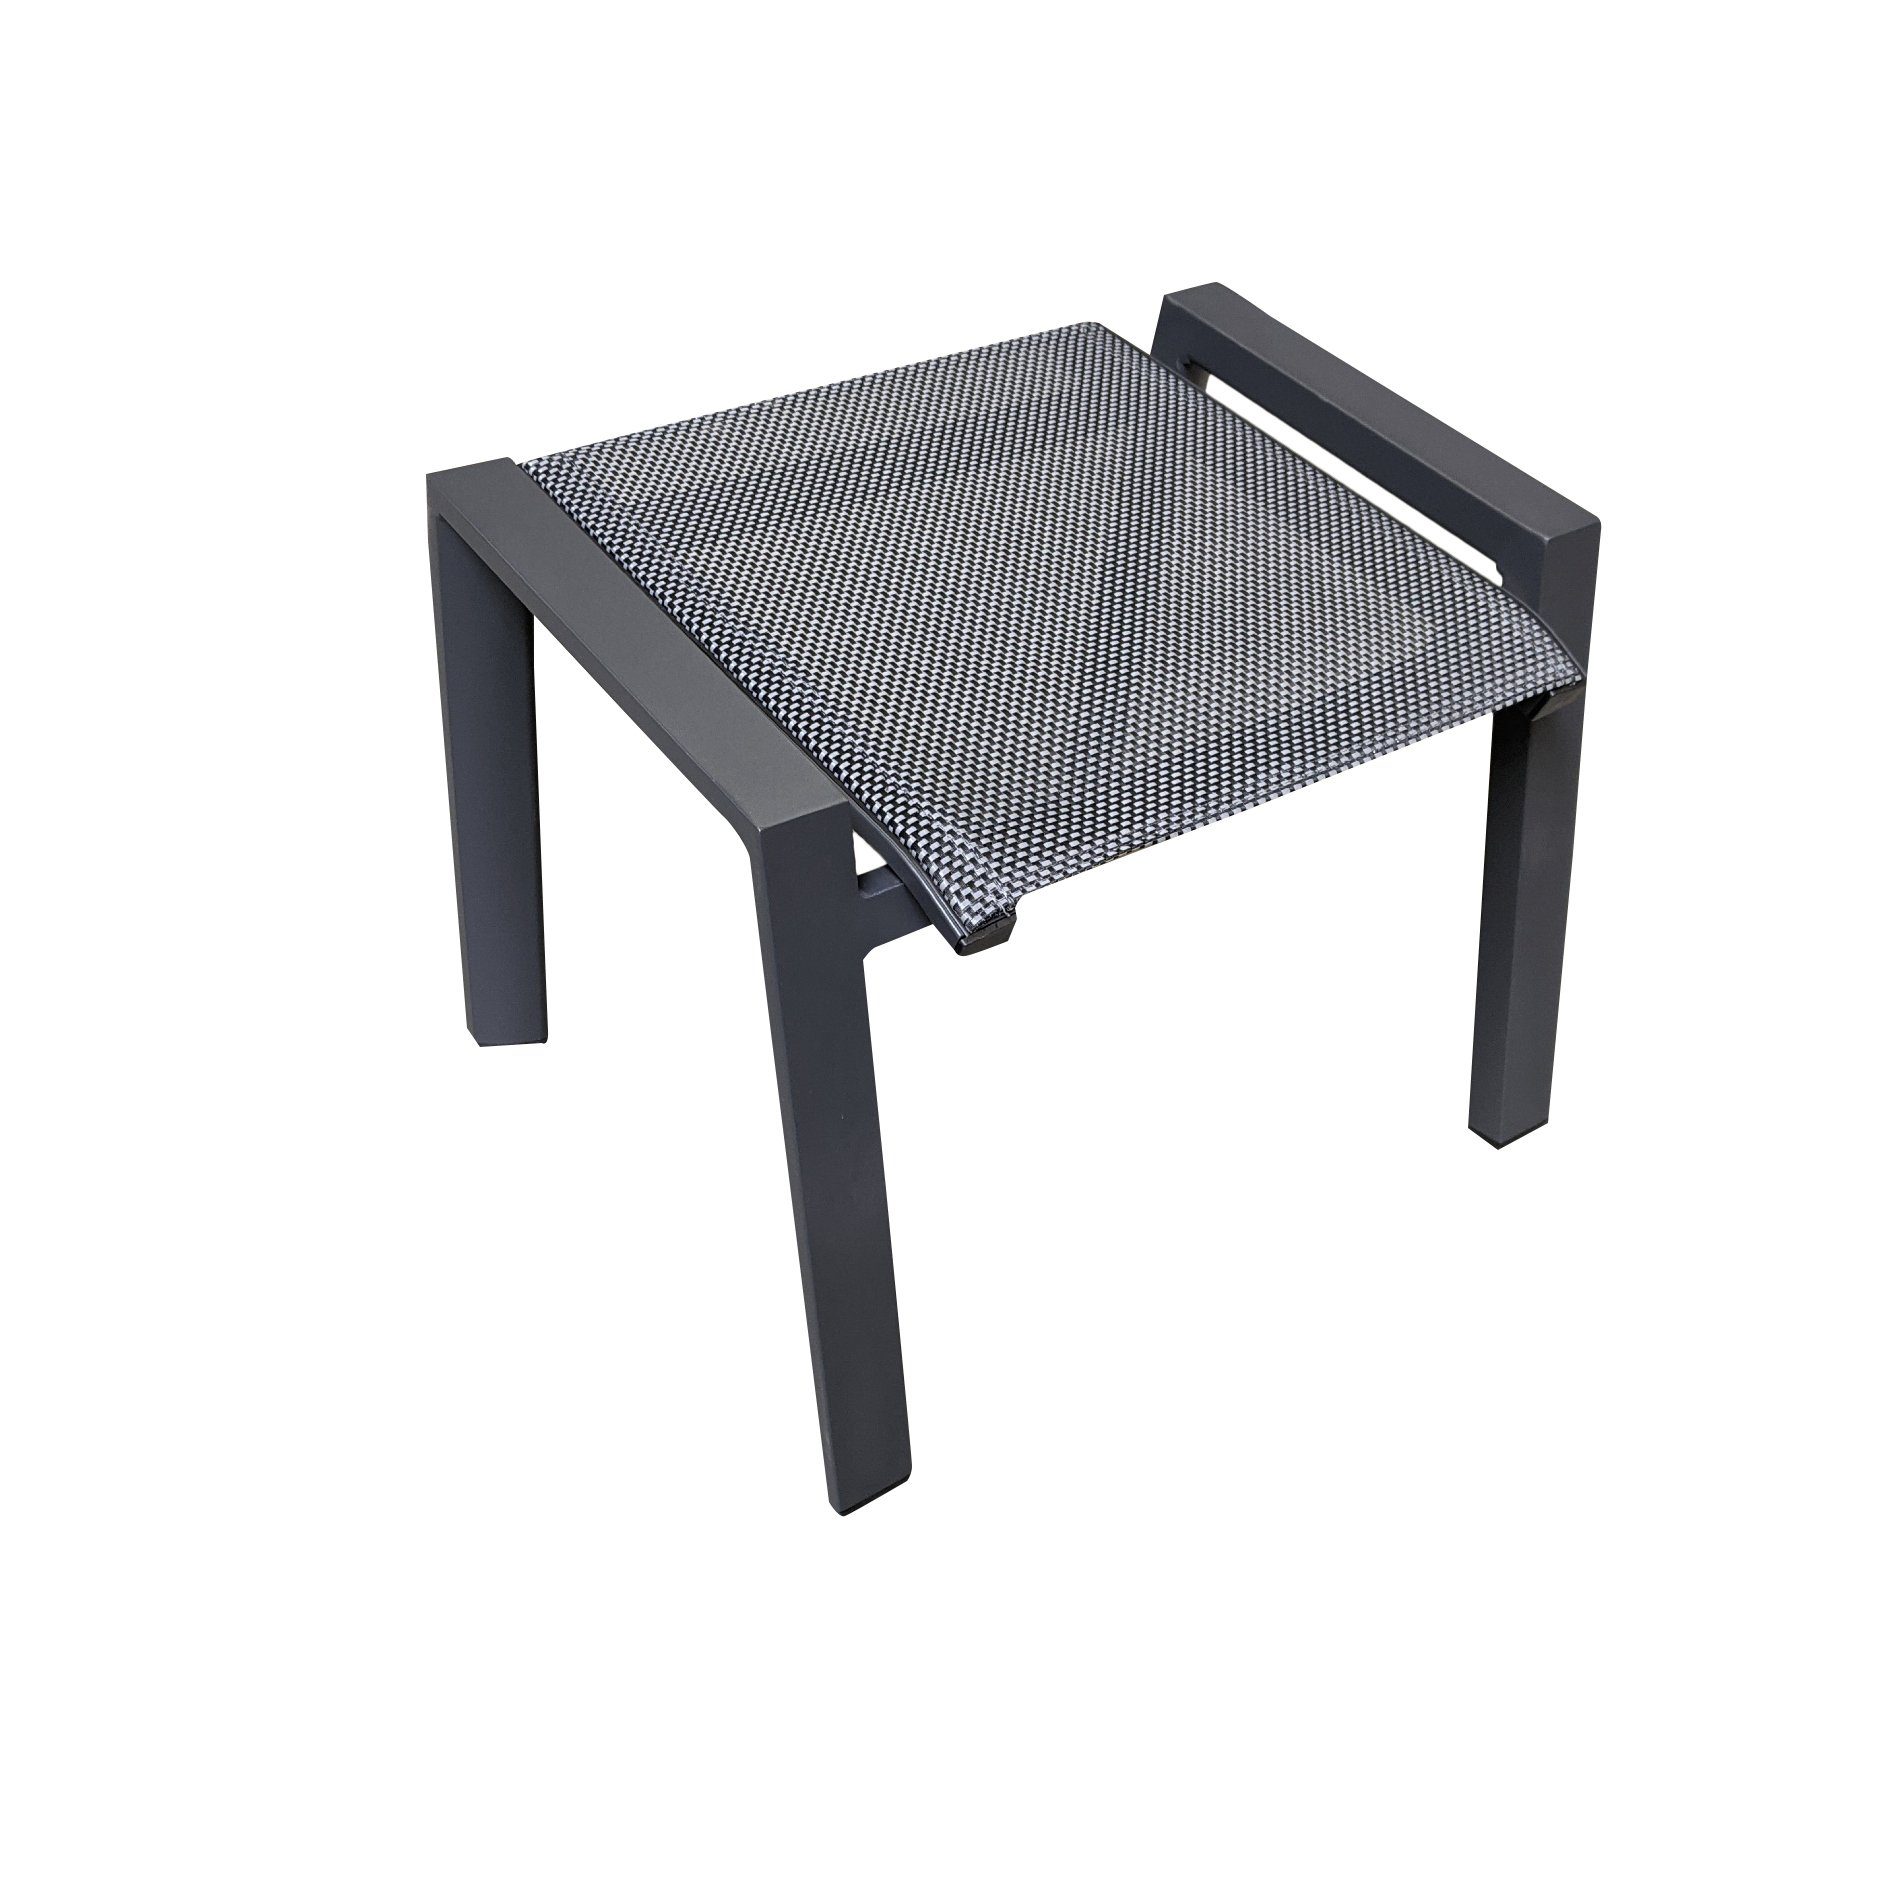 Lesli Living “Amir“ Gartenhocker, Gestell Aluminium anthrazit matt, Sitz Textilgewebe schwarz/grau